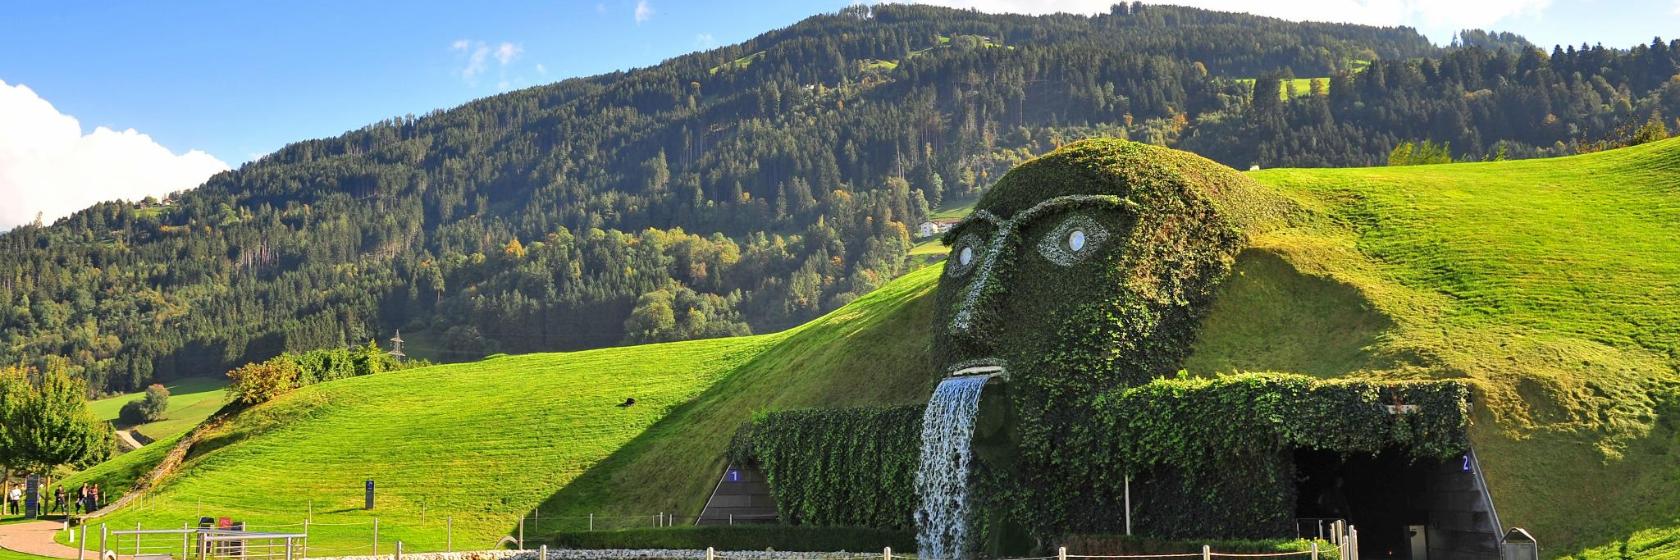 The 10 best hotels near Swarovski Crystal Worlds in Wattens, Austria